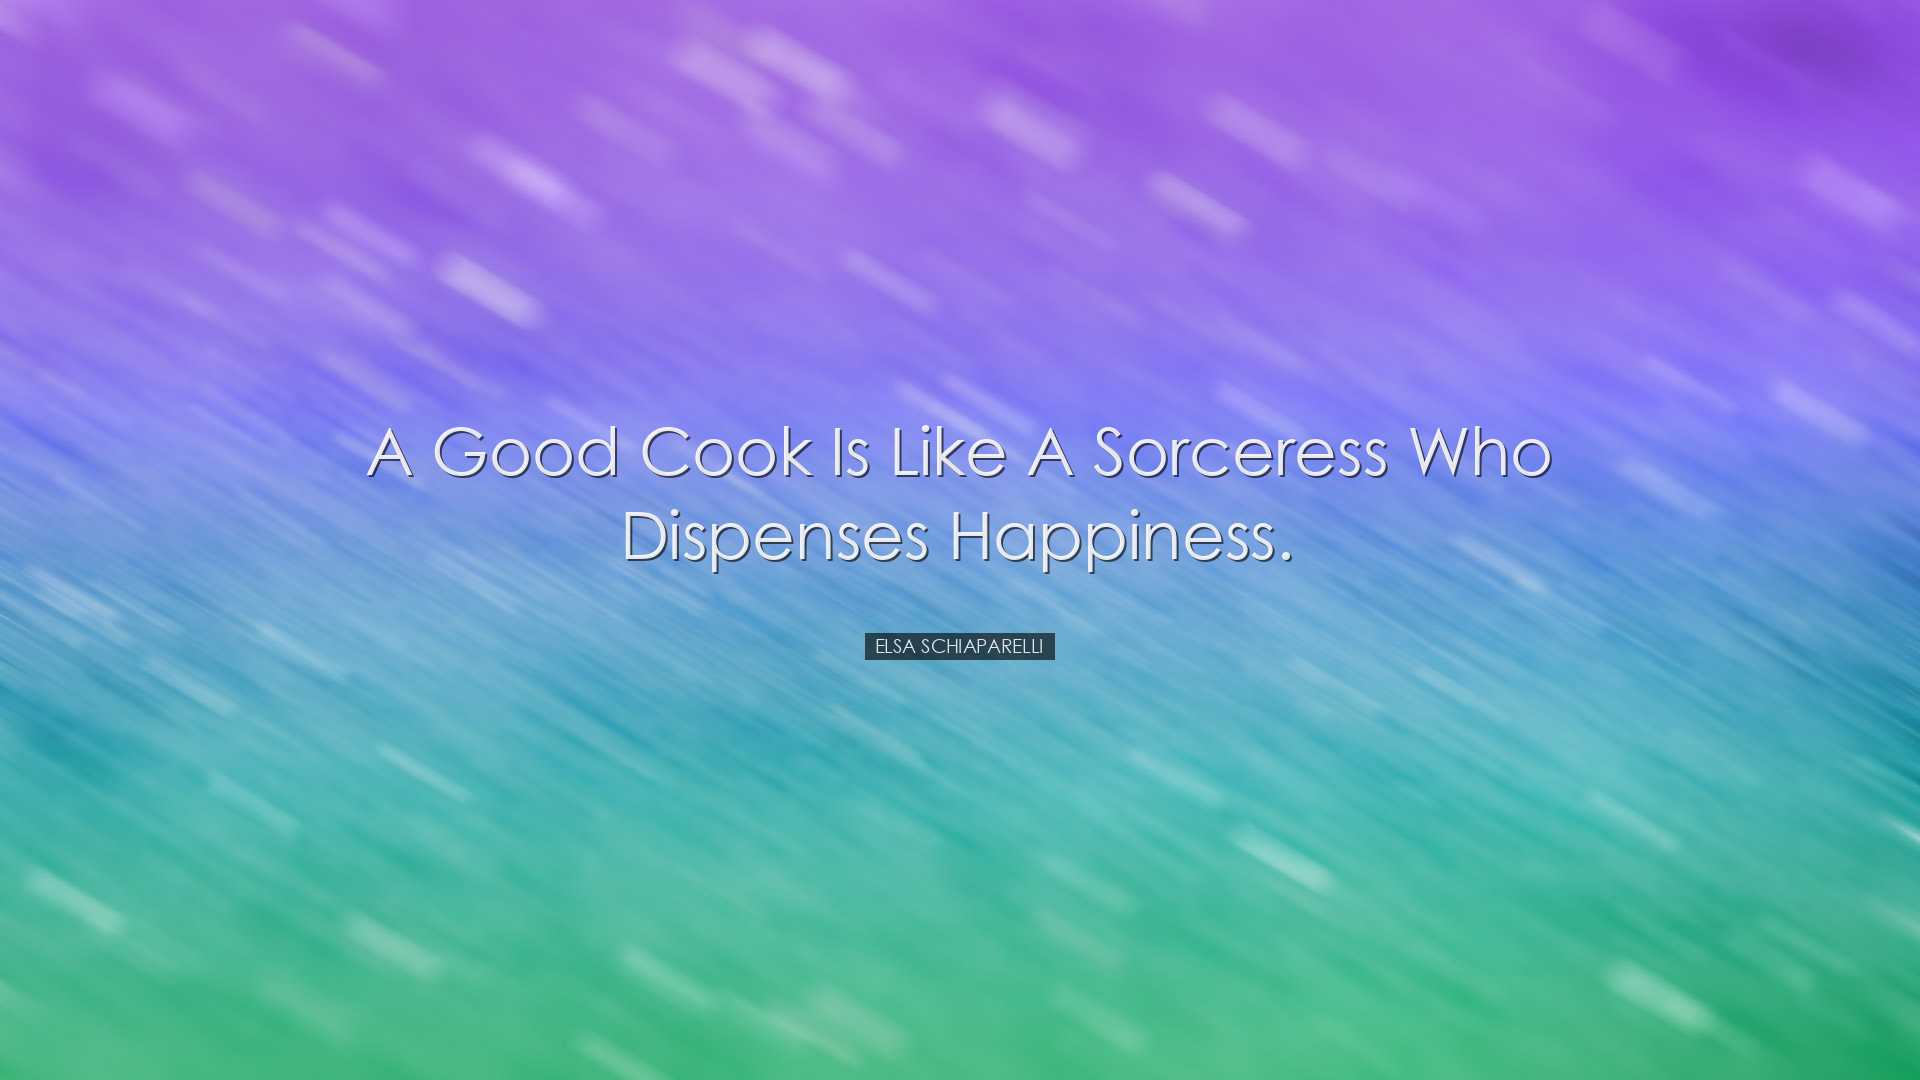 A good cook is like a sorceress who dispenses happiness. - Elsa Sc